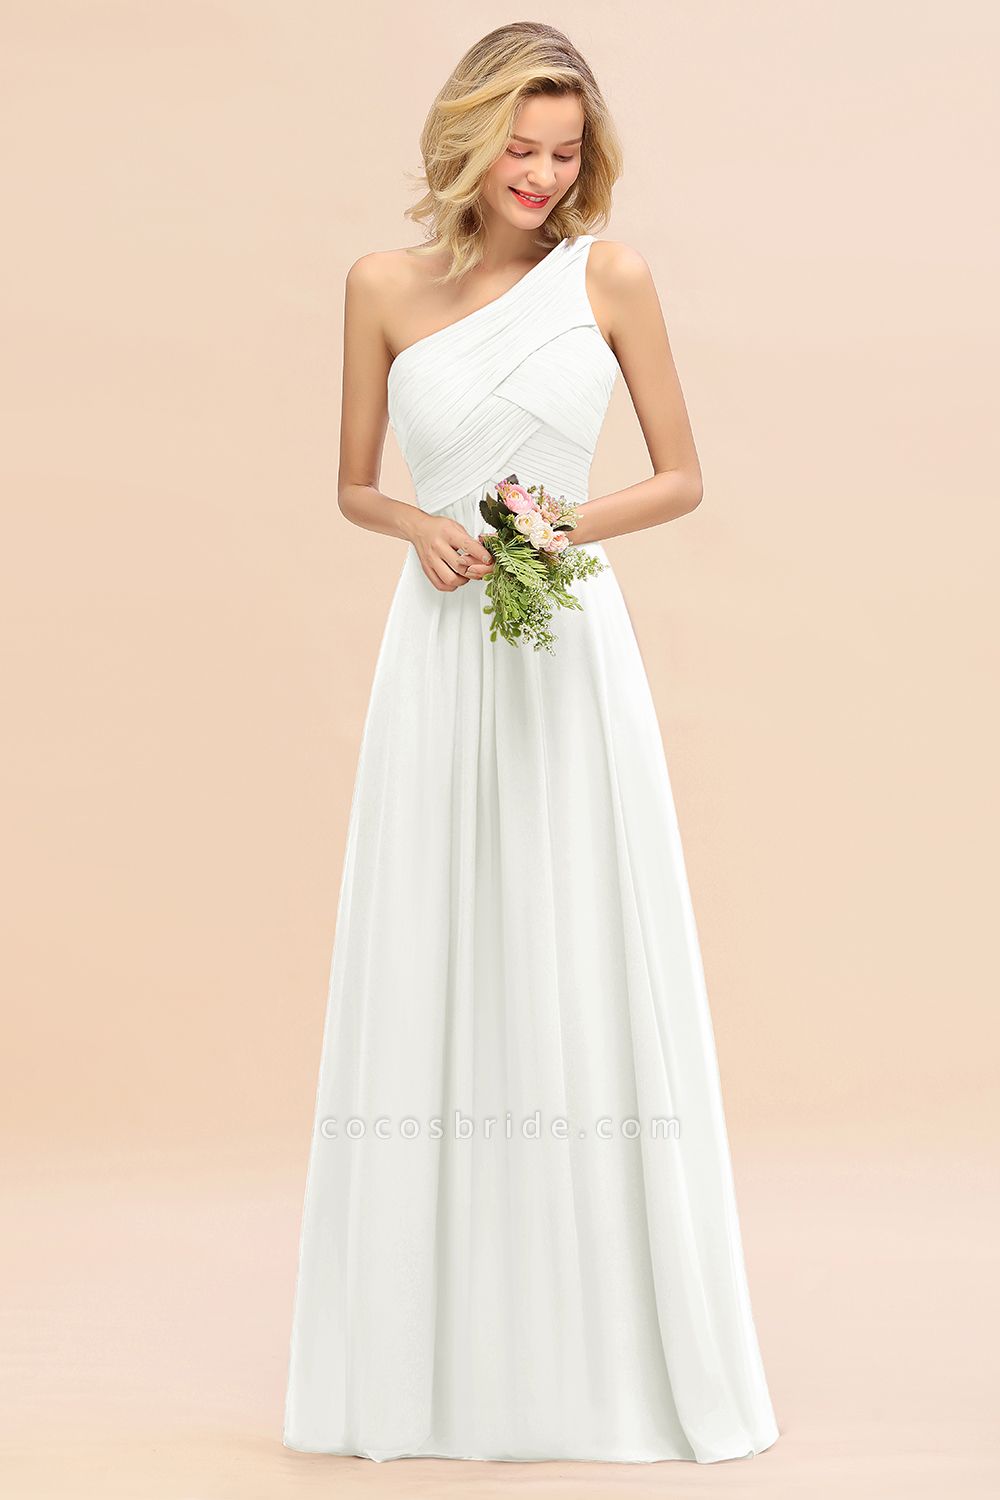 BM0756 Elegant Ruffles One Shoulder Long Bridesmaid Dress